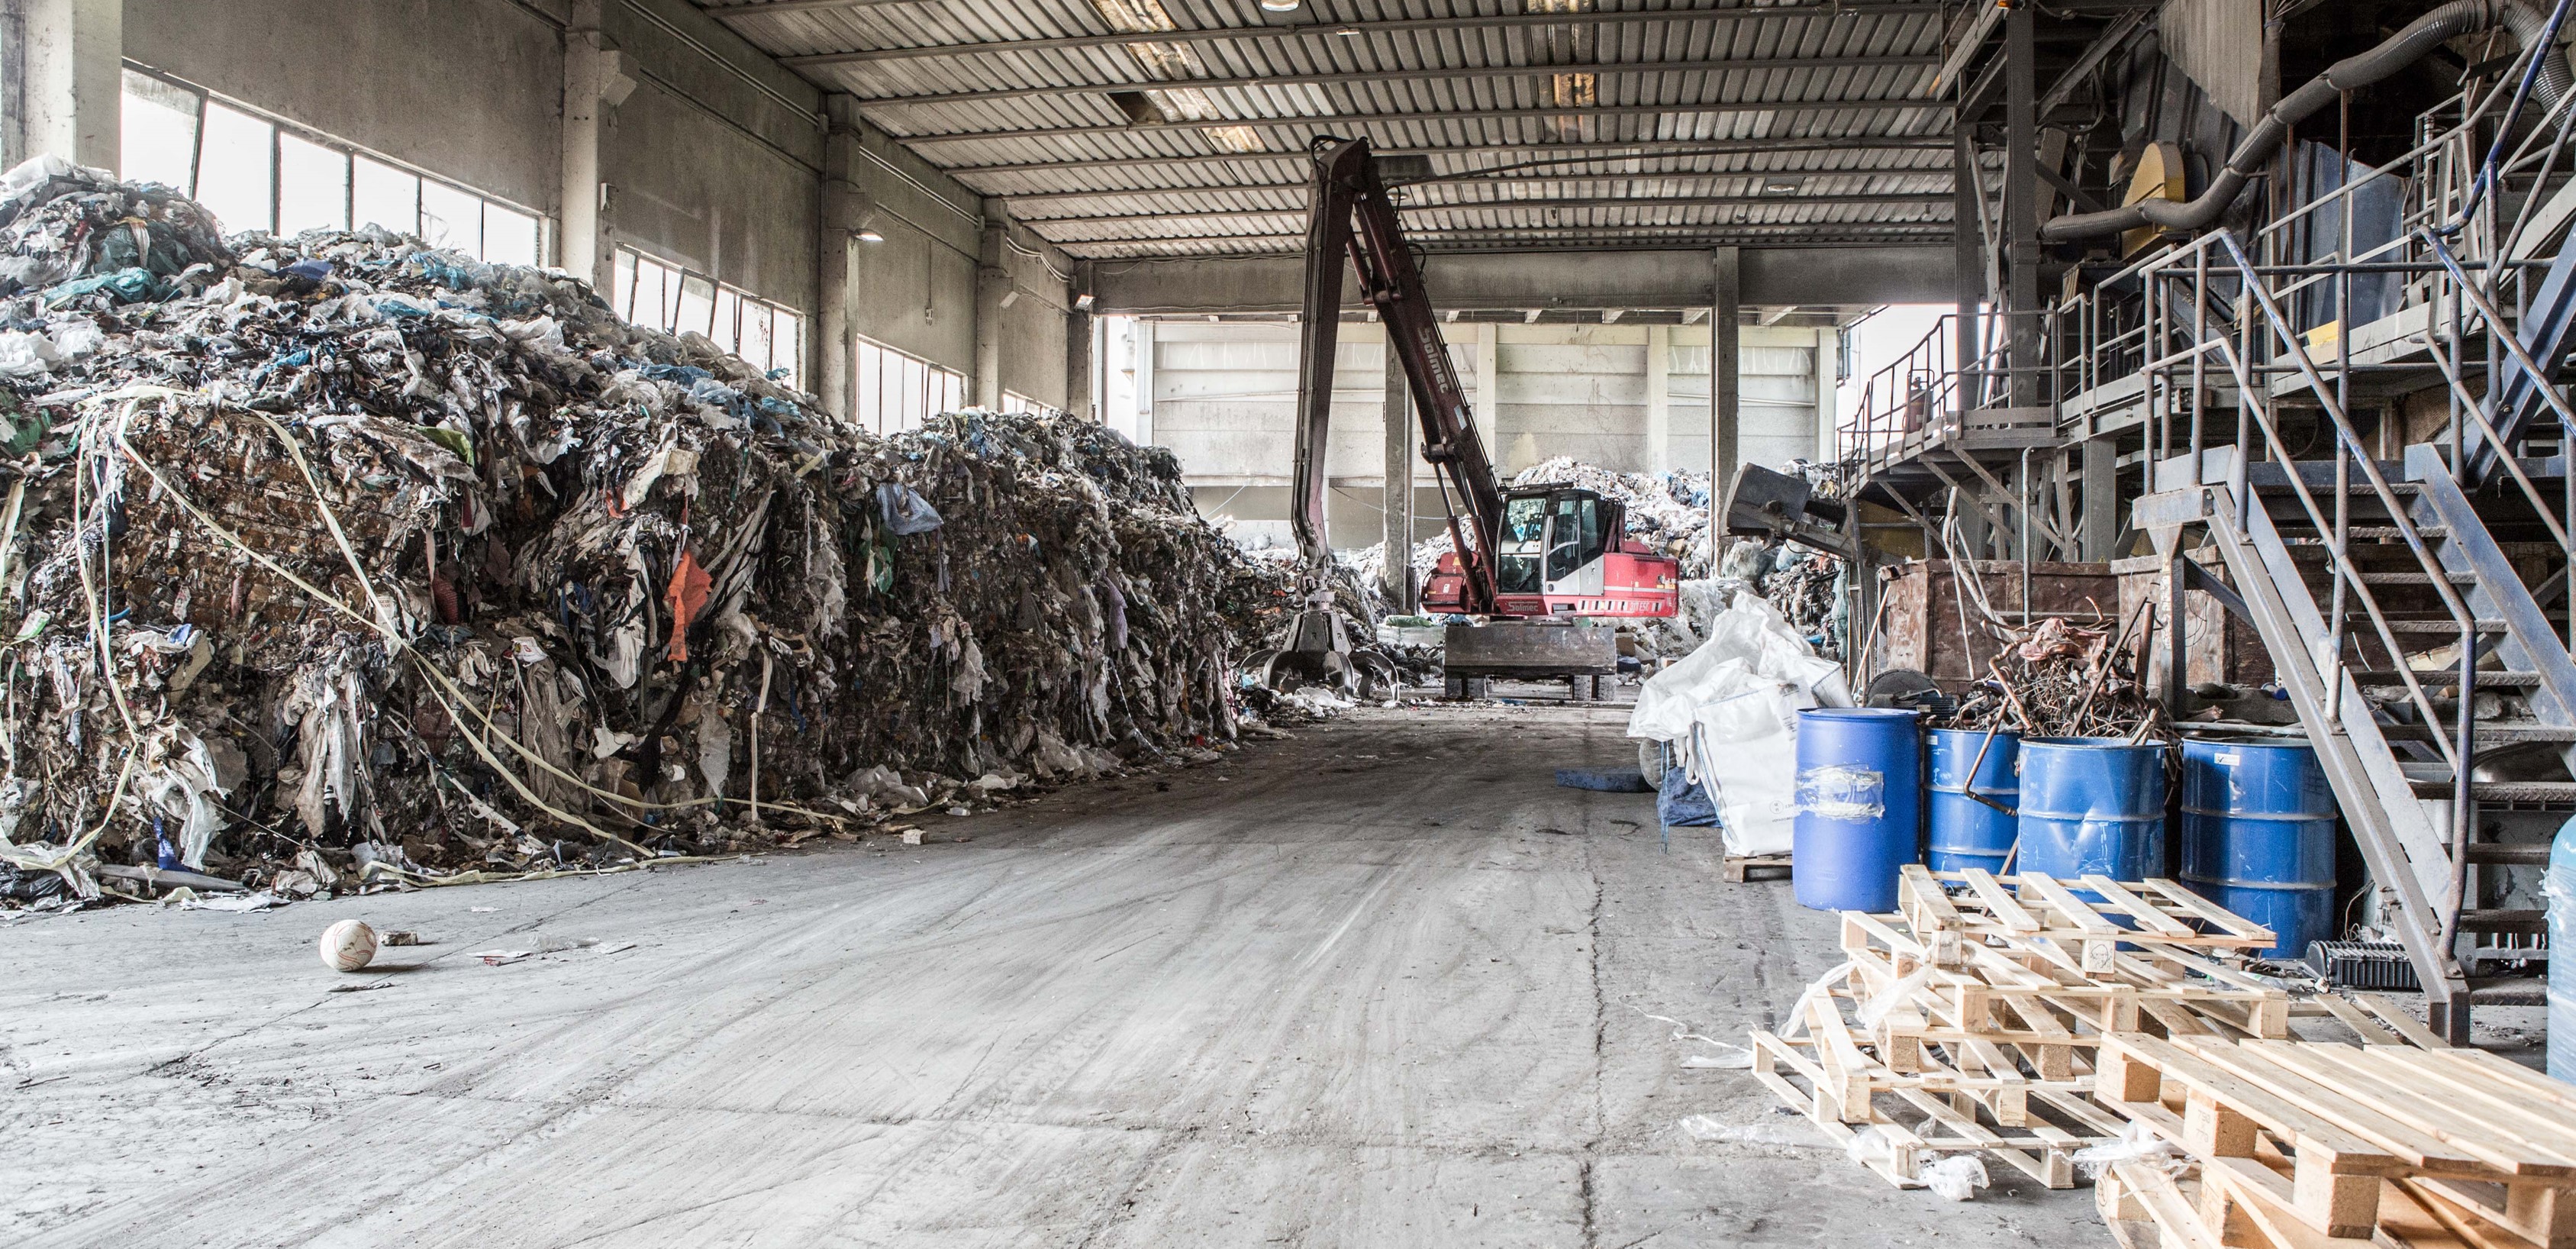 Selection plant in the Hazardous waste treatment platform in Castelfranco di Sotto